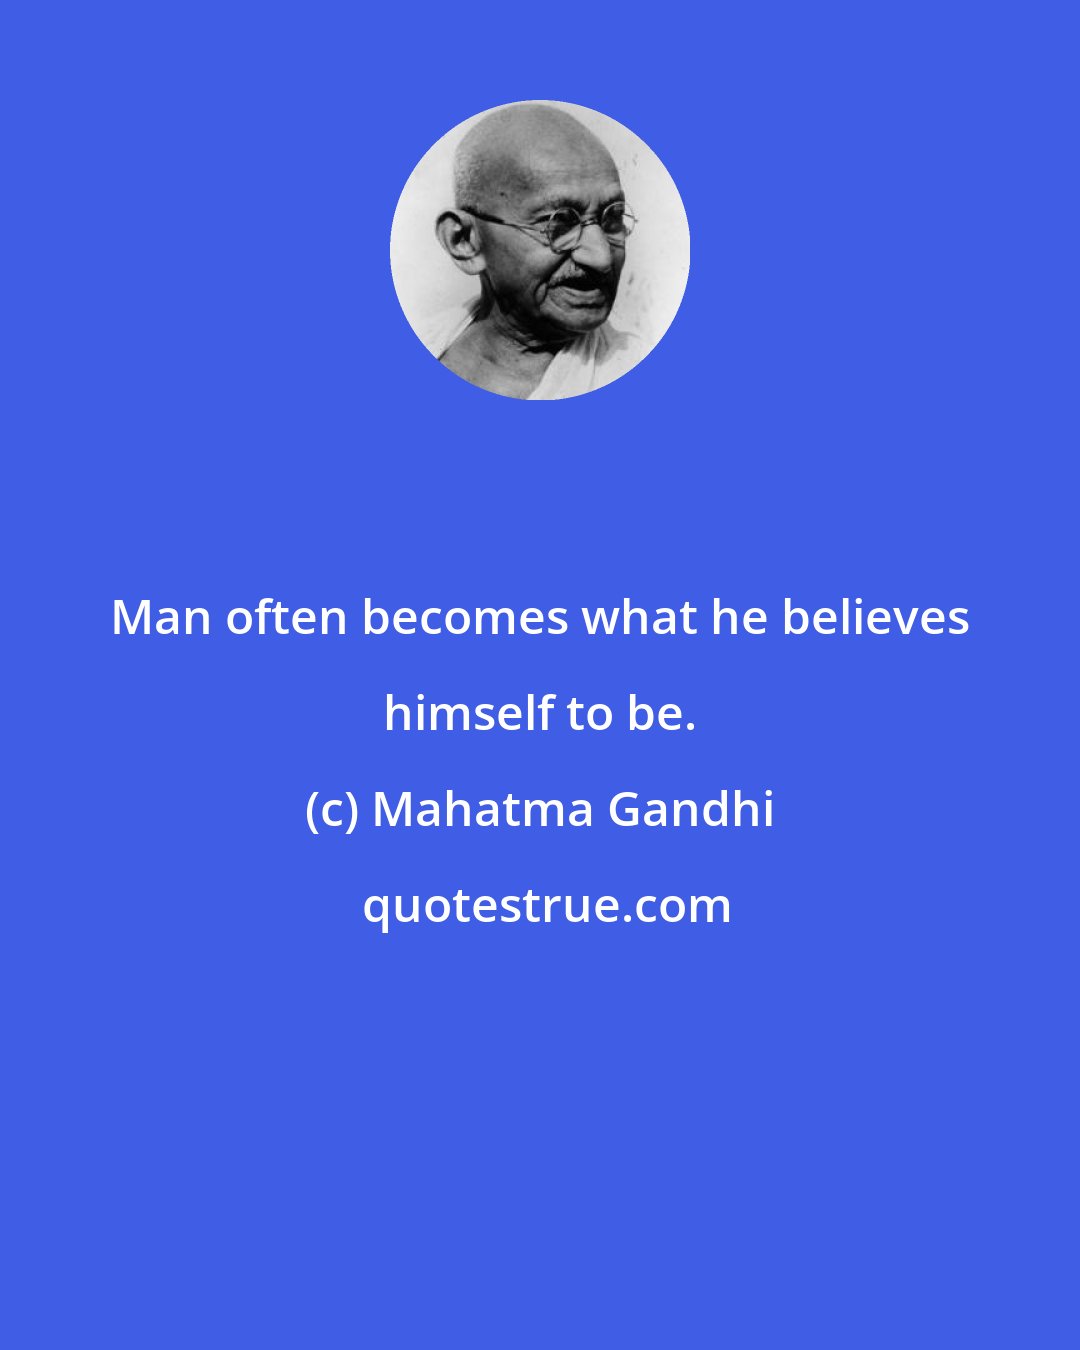 Mahatma Gandhi: Man often becomes what he believes himself to be.